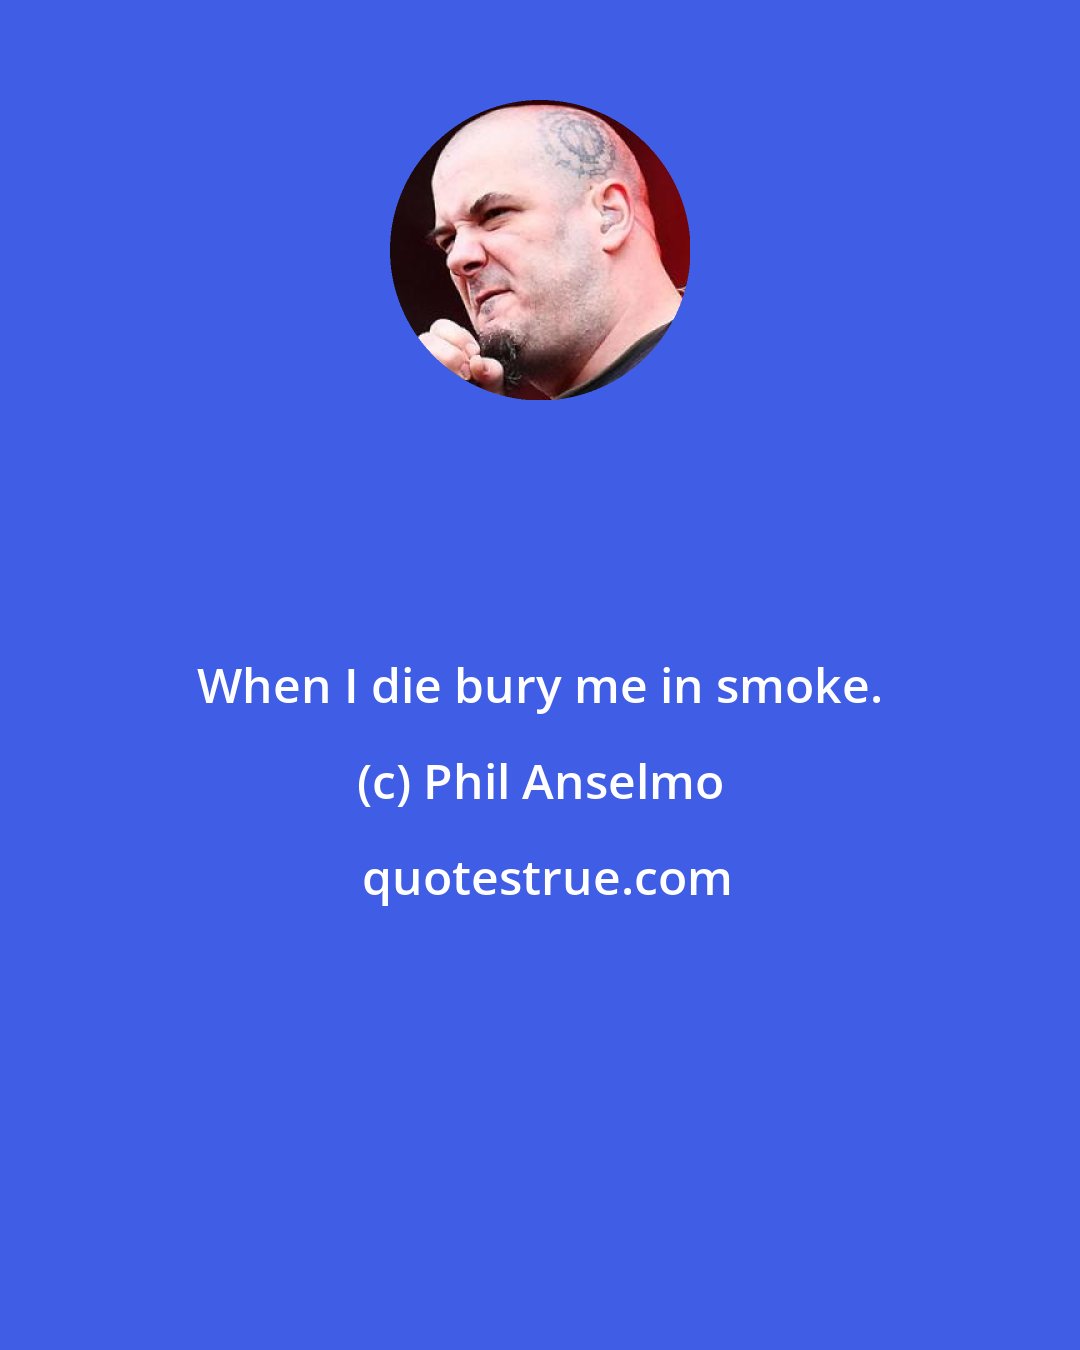 Phil Anselmo: When I die bury me in smoke.